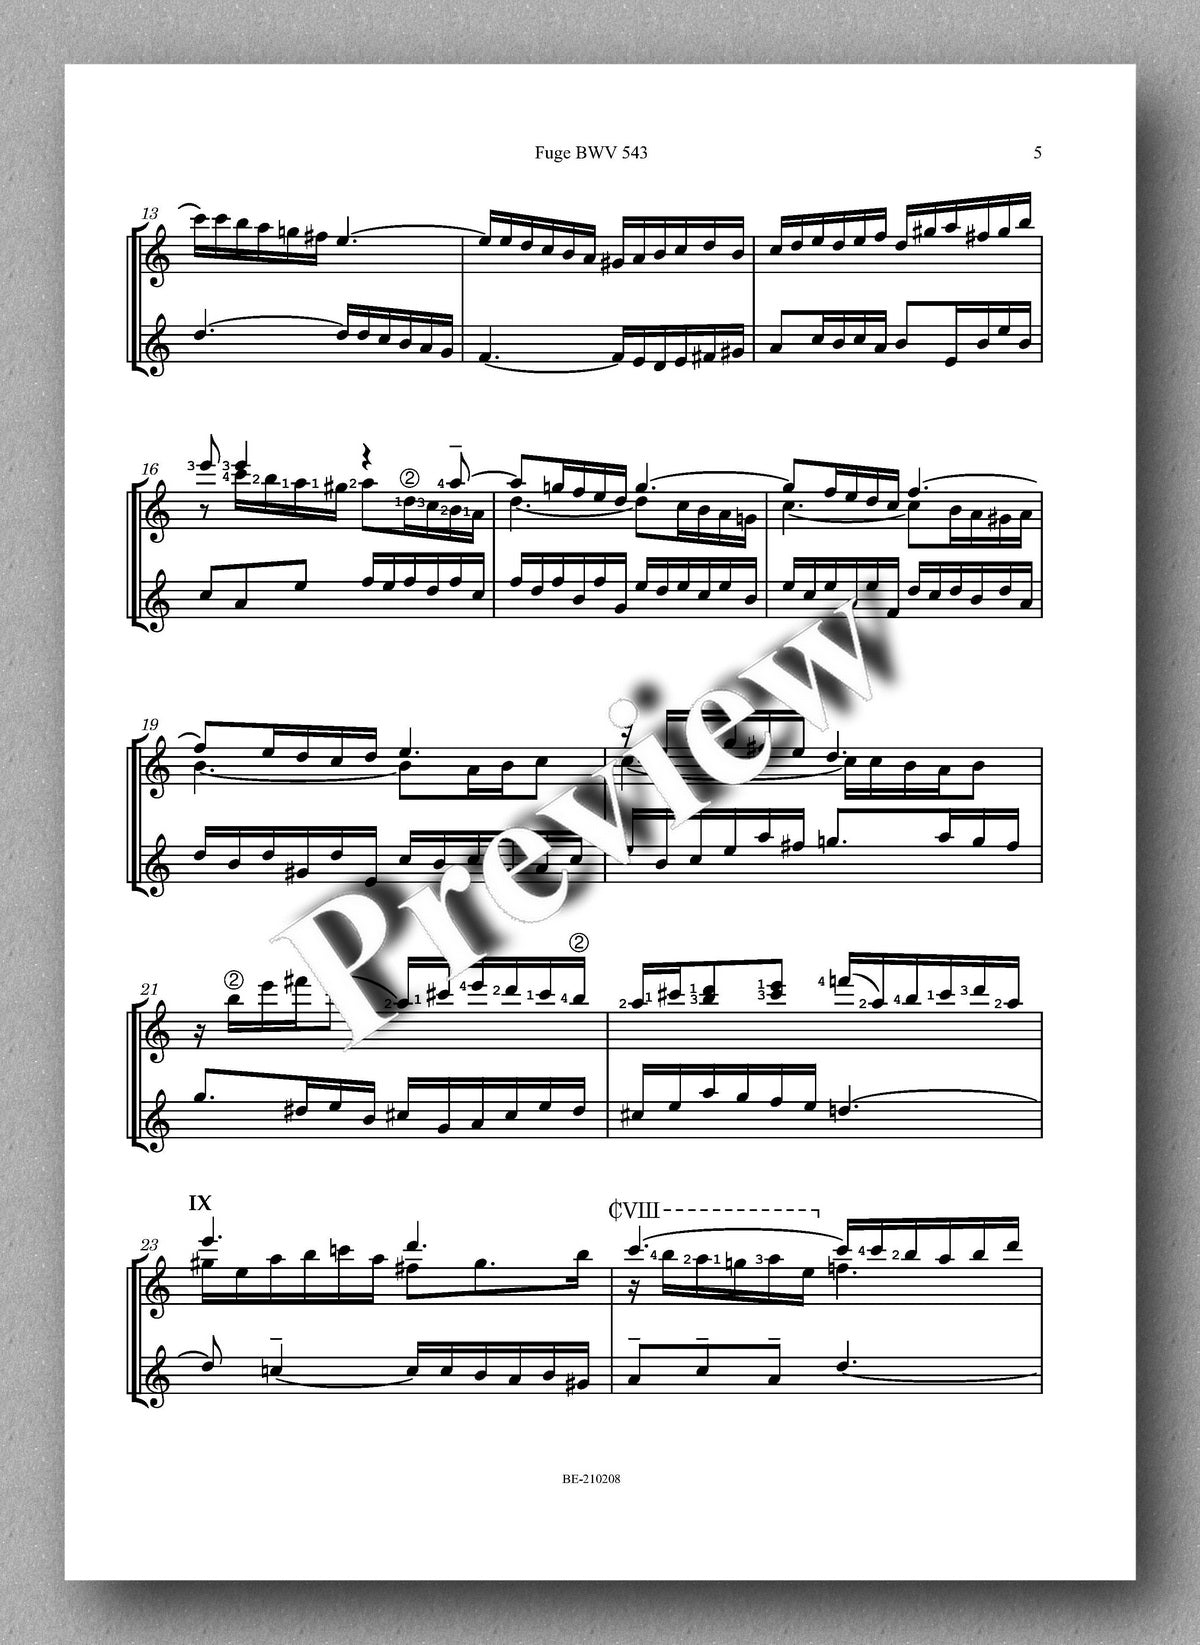 Bach-Schley, Fugue BWV 543